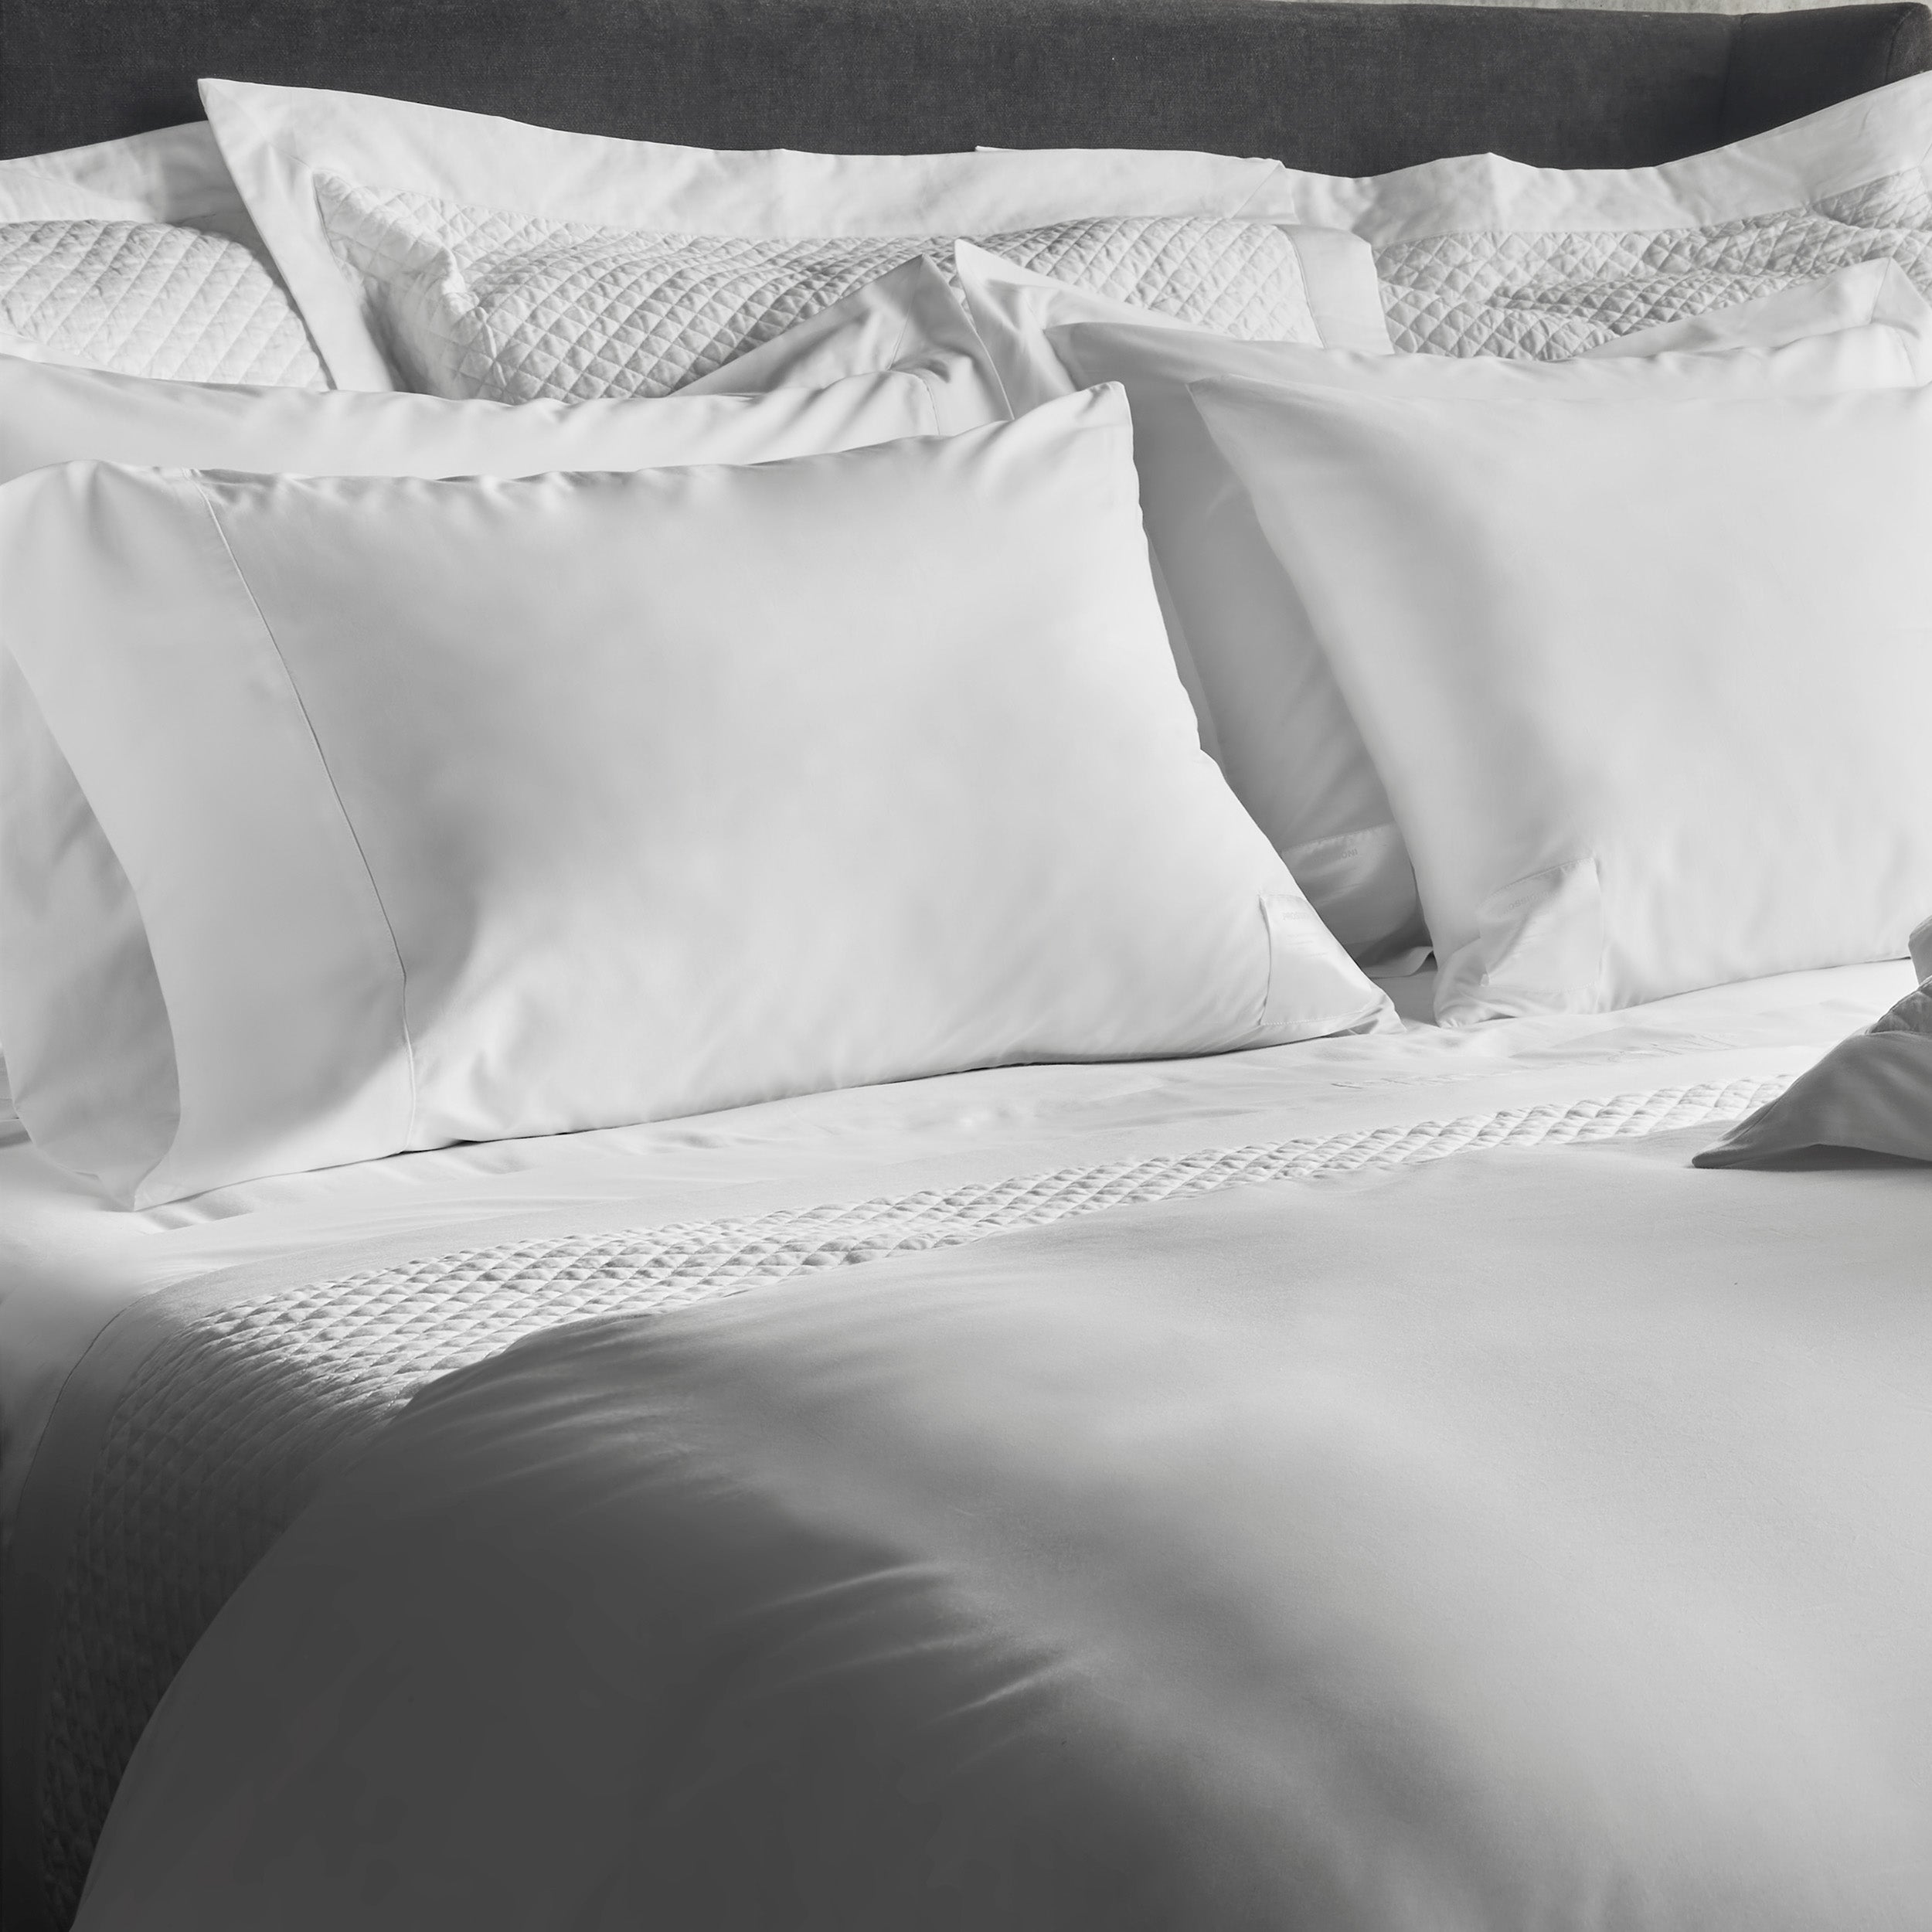 Boutique Hotel Sateen / Pillowcase Standard / PROSSIONI® White, Boutique Hotel Sateen / Pillowcase King / PROSSIONI® White